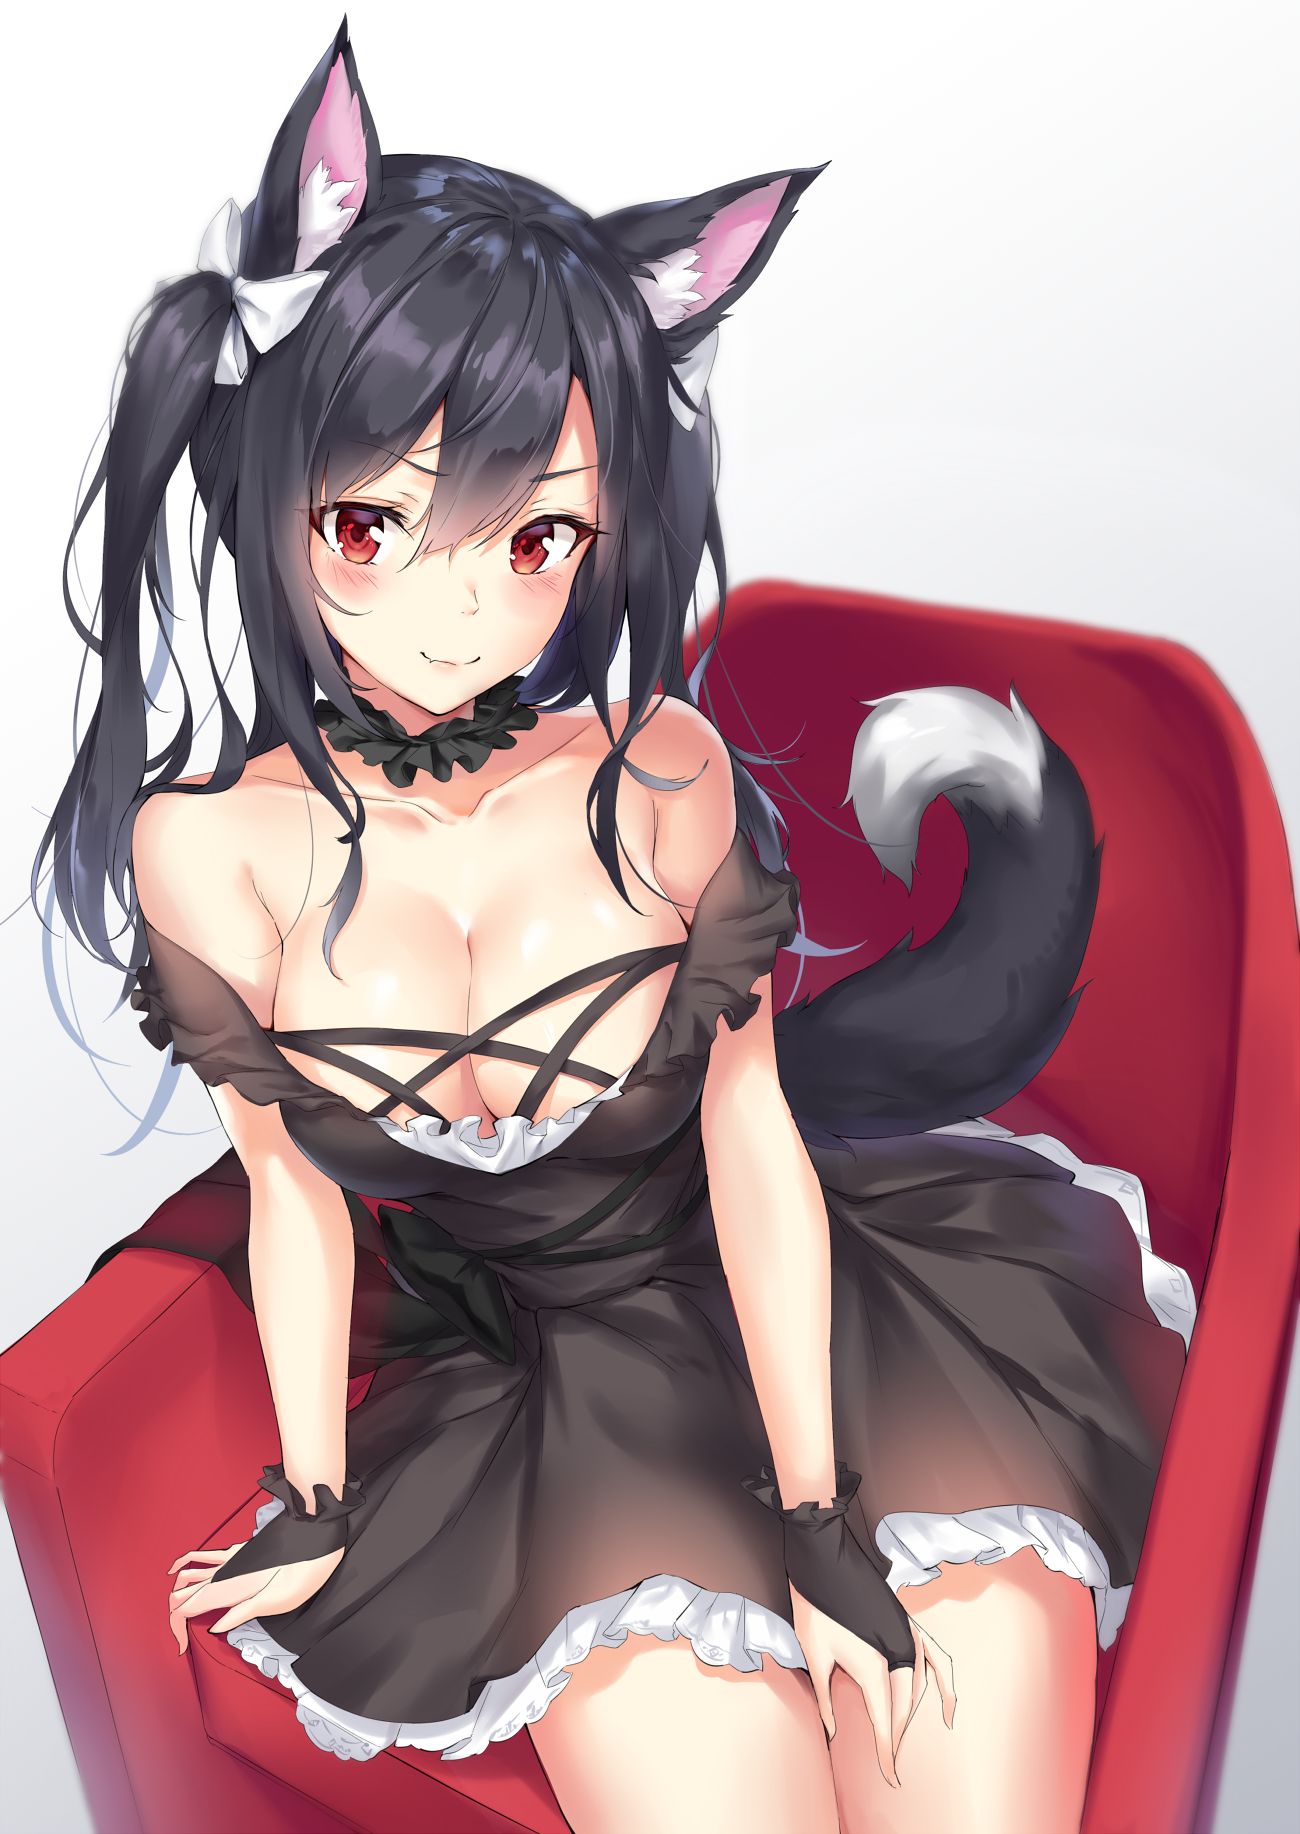 Cute neko girl Shigure with cat ears and tail.